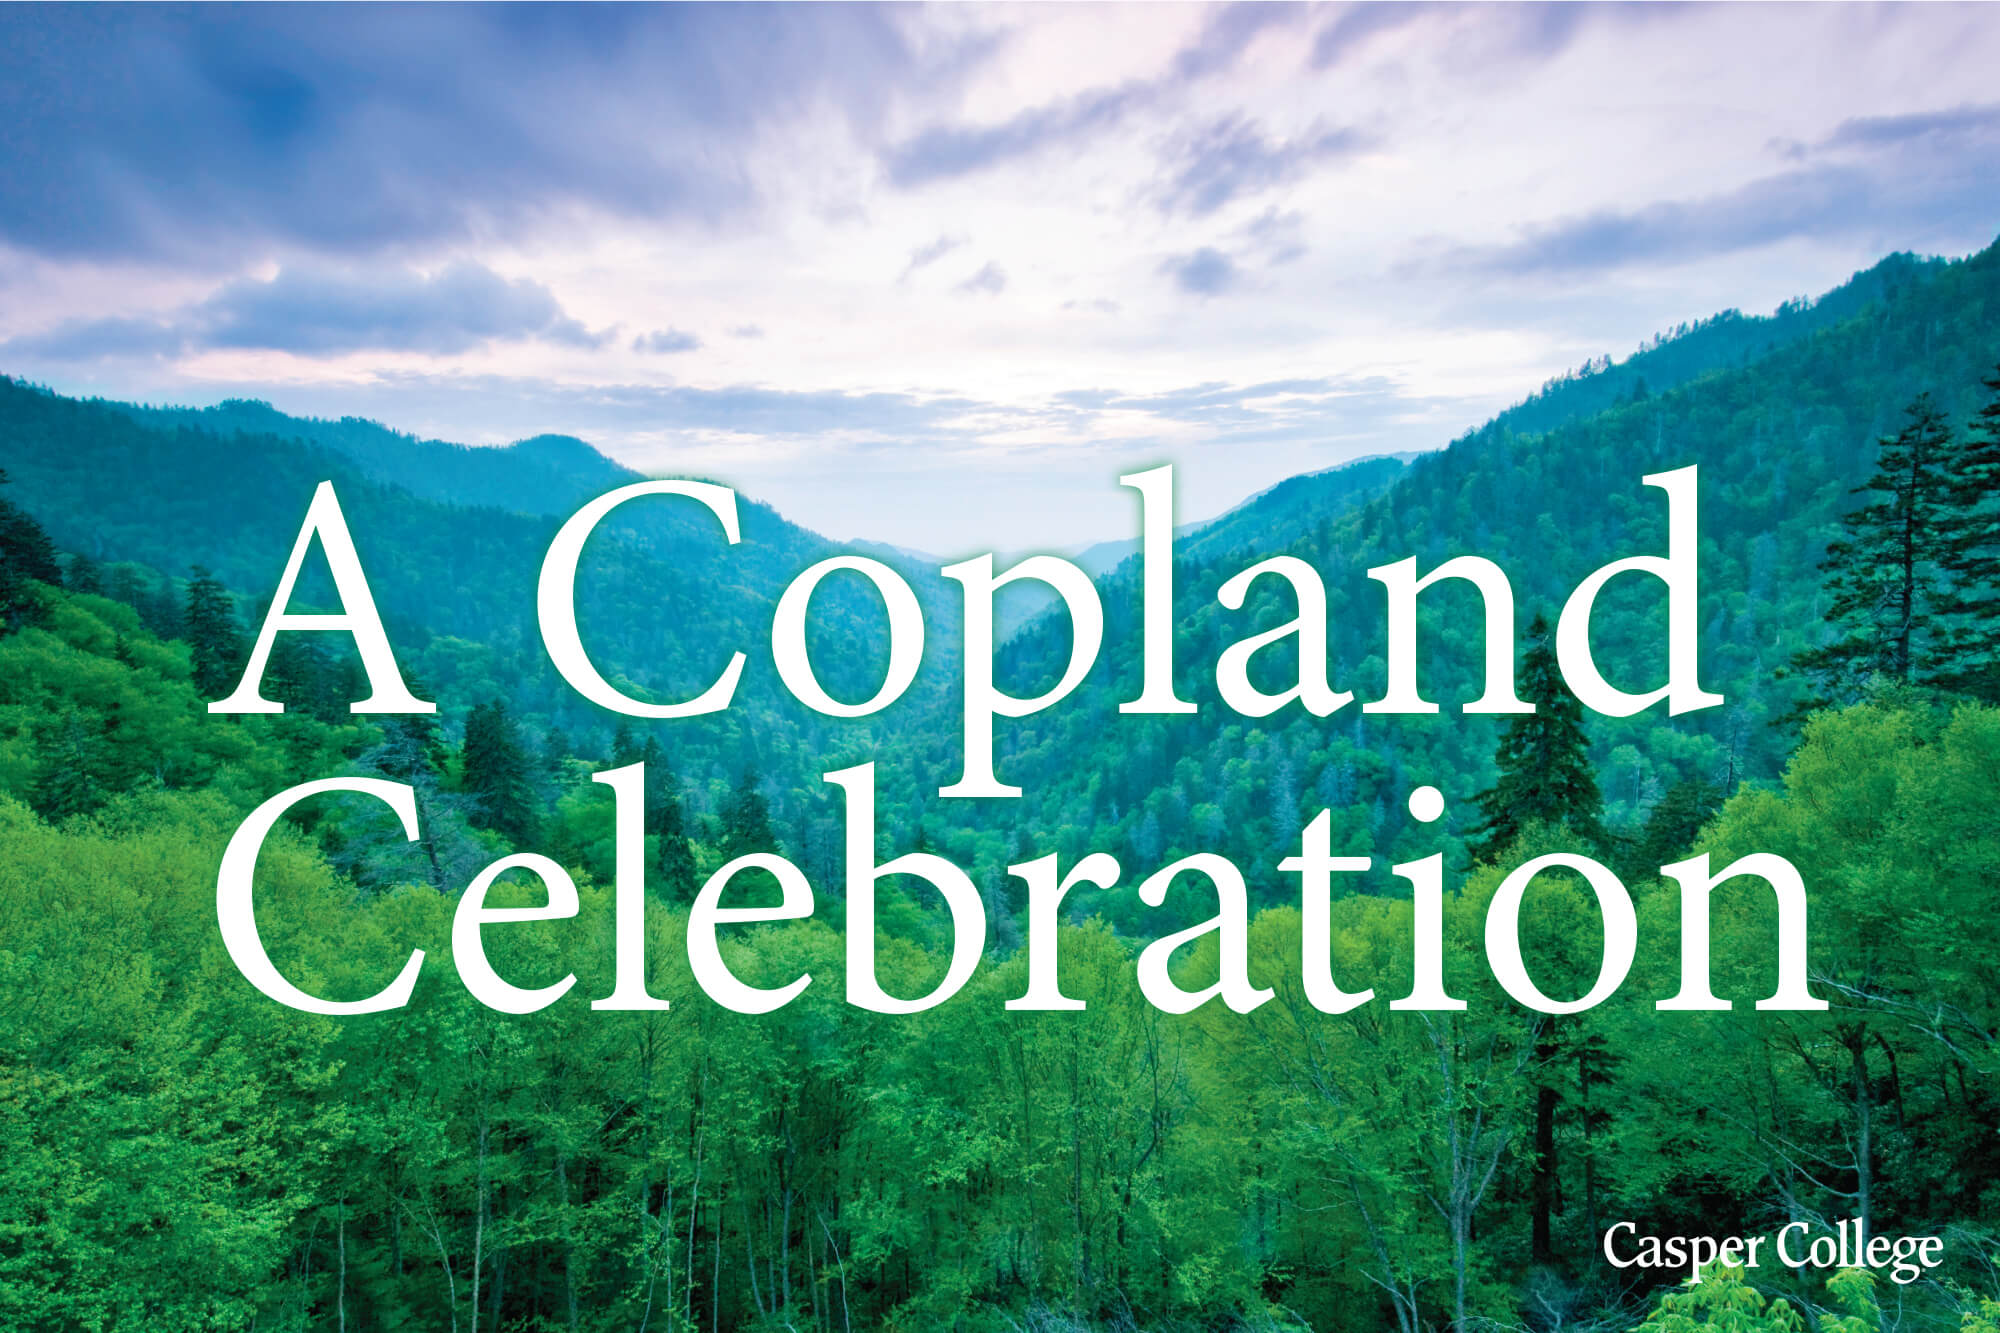 Image for "A Copland Celebration" press release.